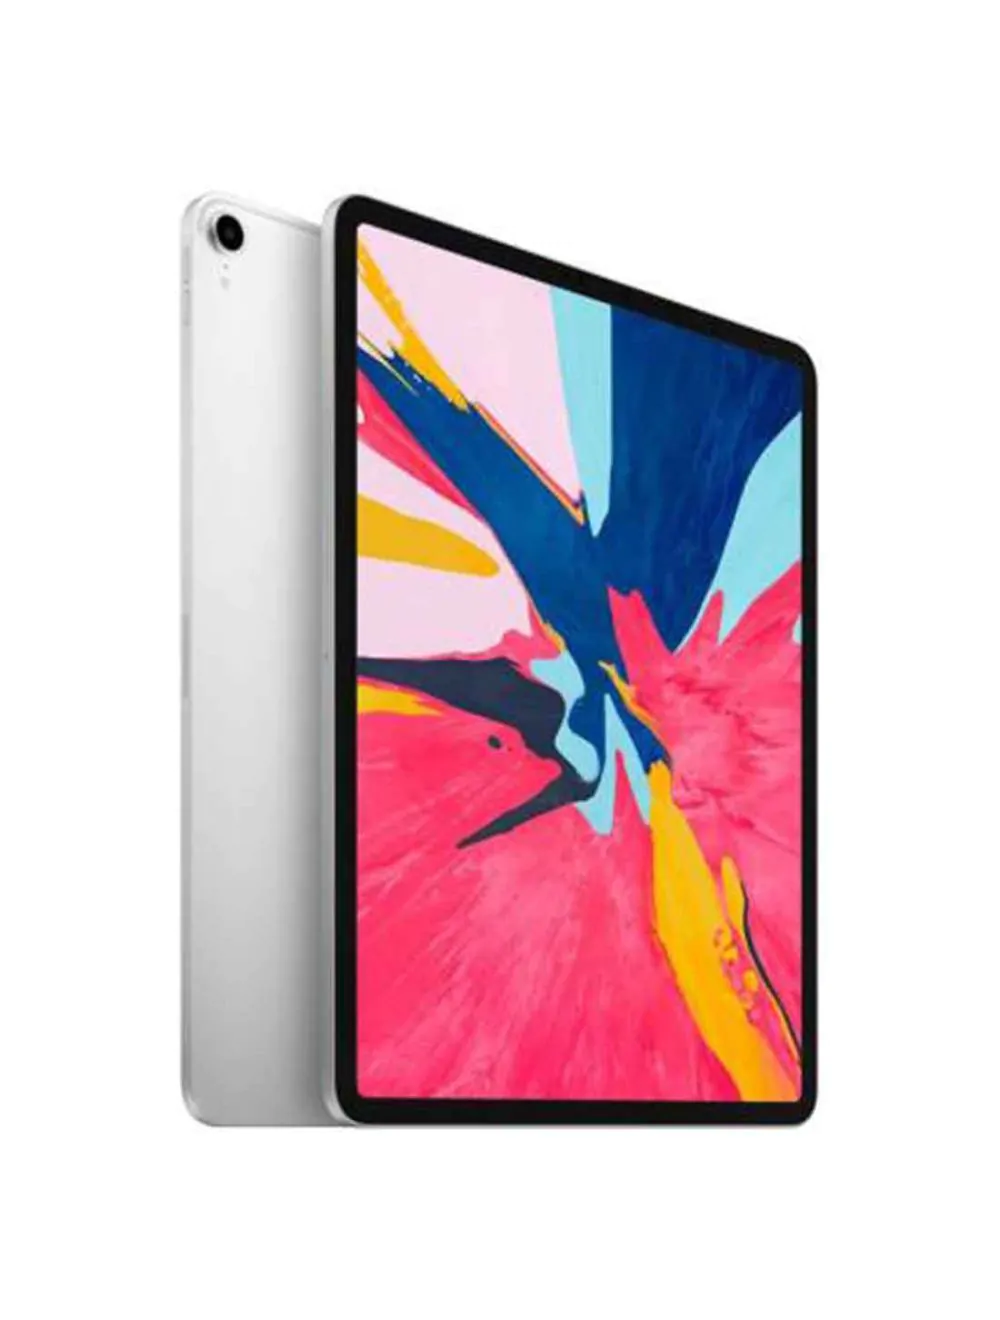 2020 Apple iPad Pro (12.9-inch, Wi-Fi + Cellular, 256GB) - Space Gray  (Renewed)